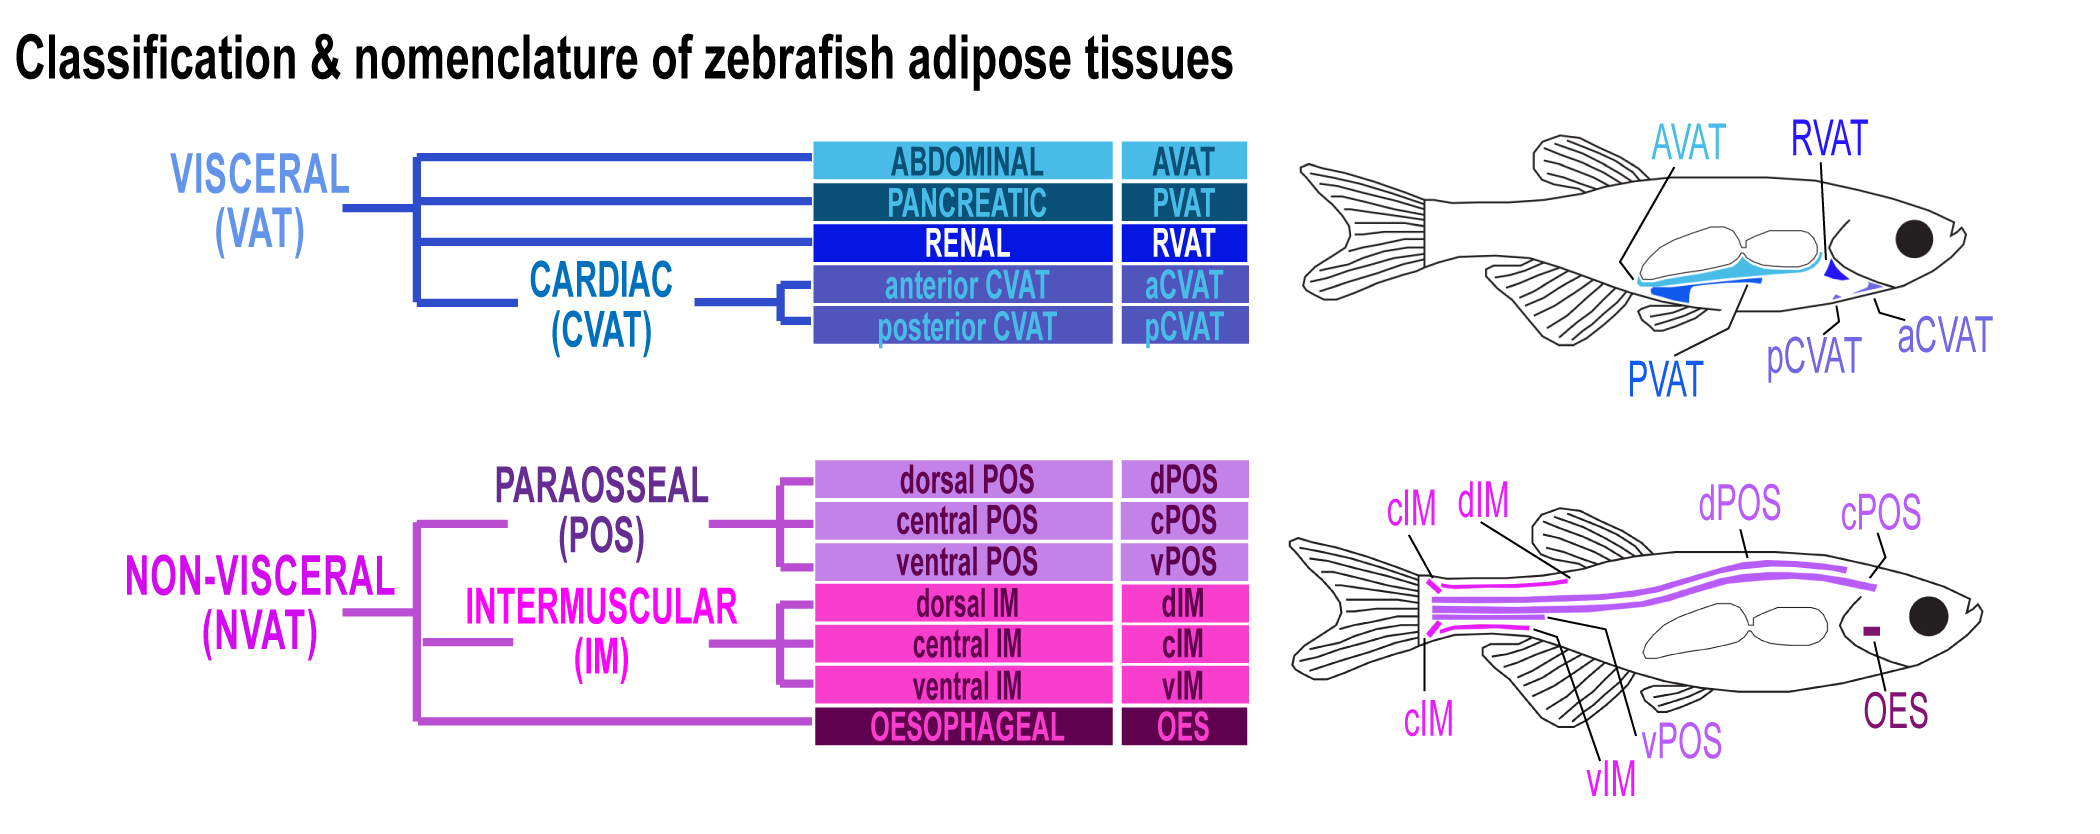 Classification and nomenclature of zebrafish adipose tissues